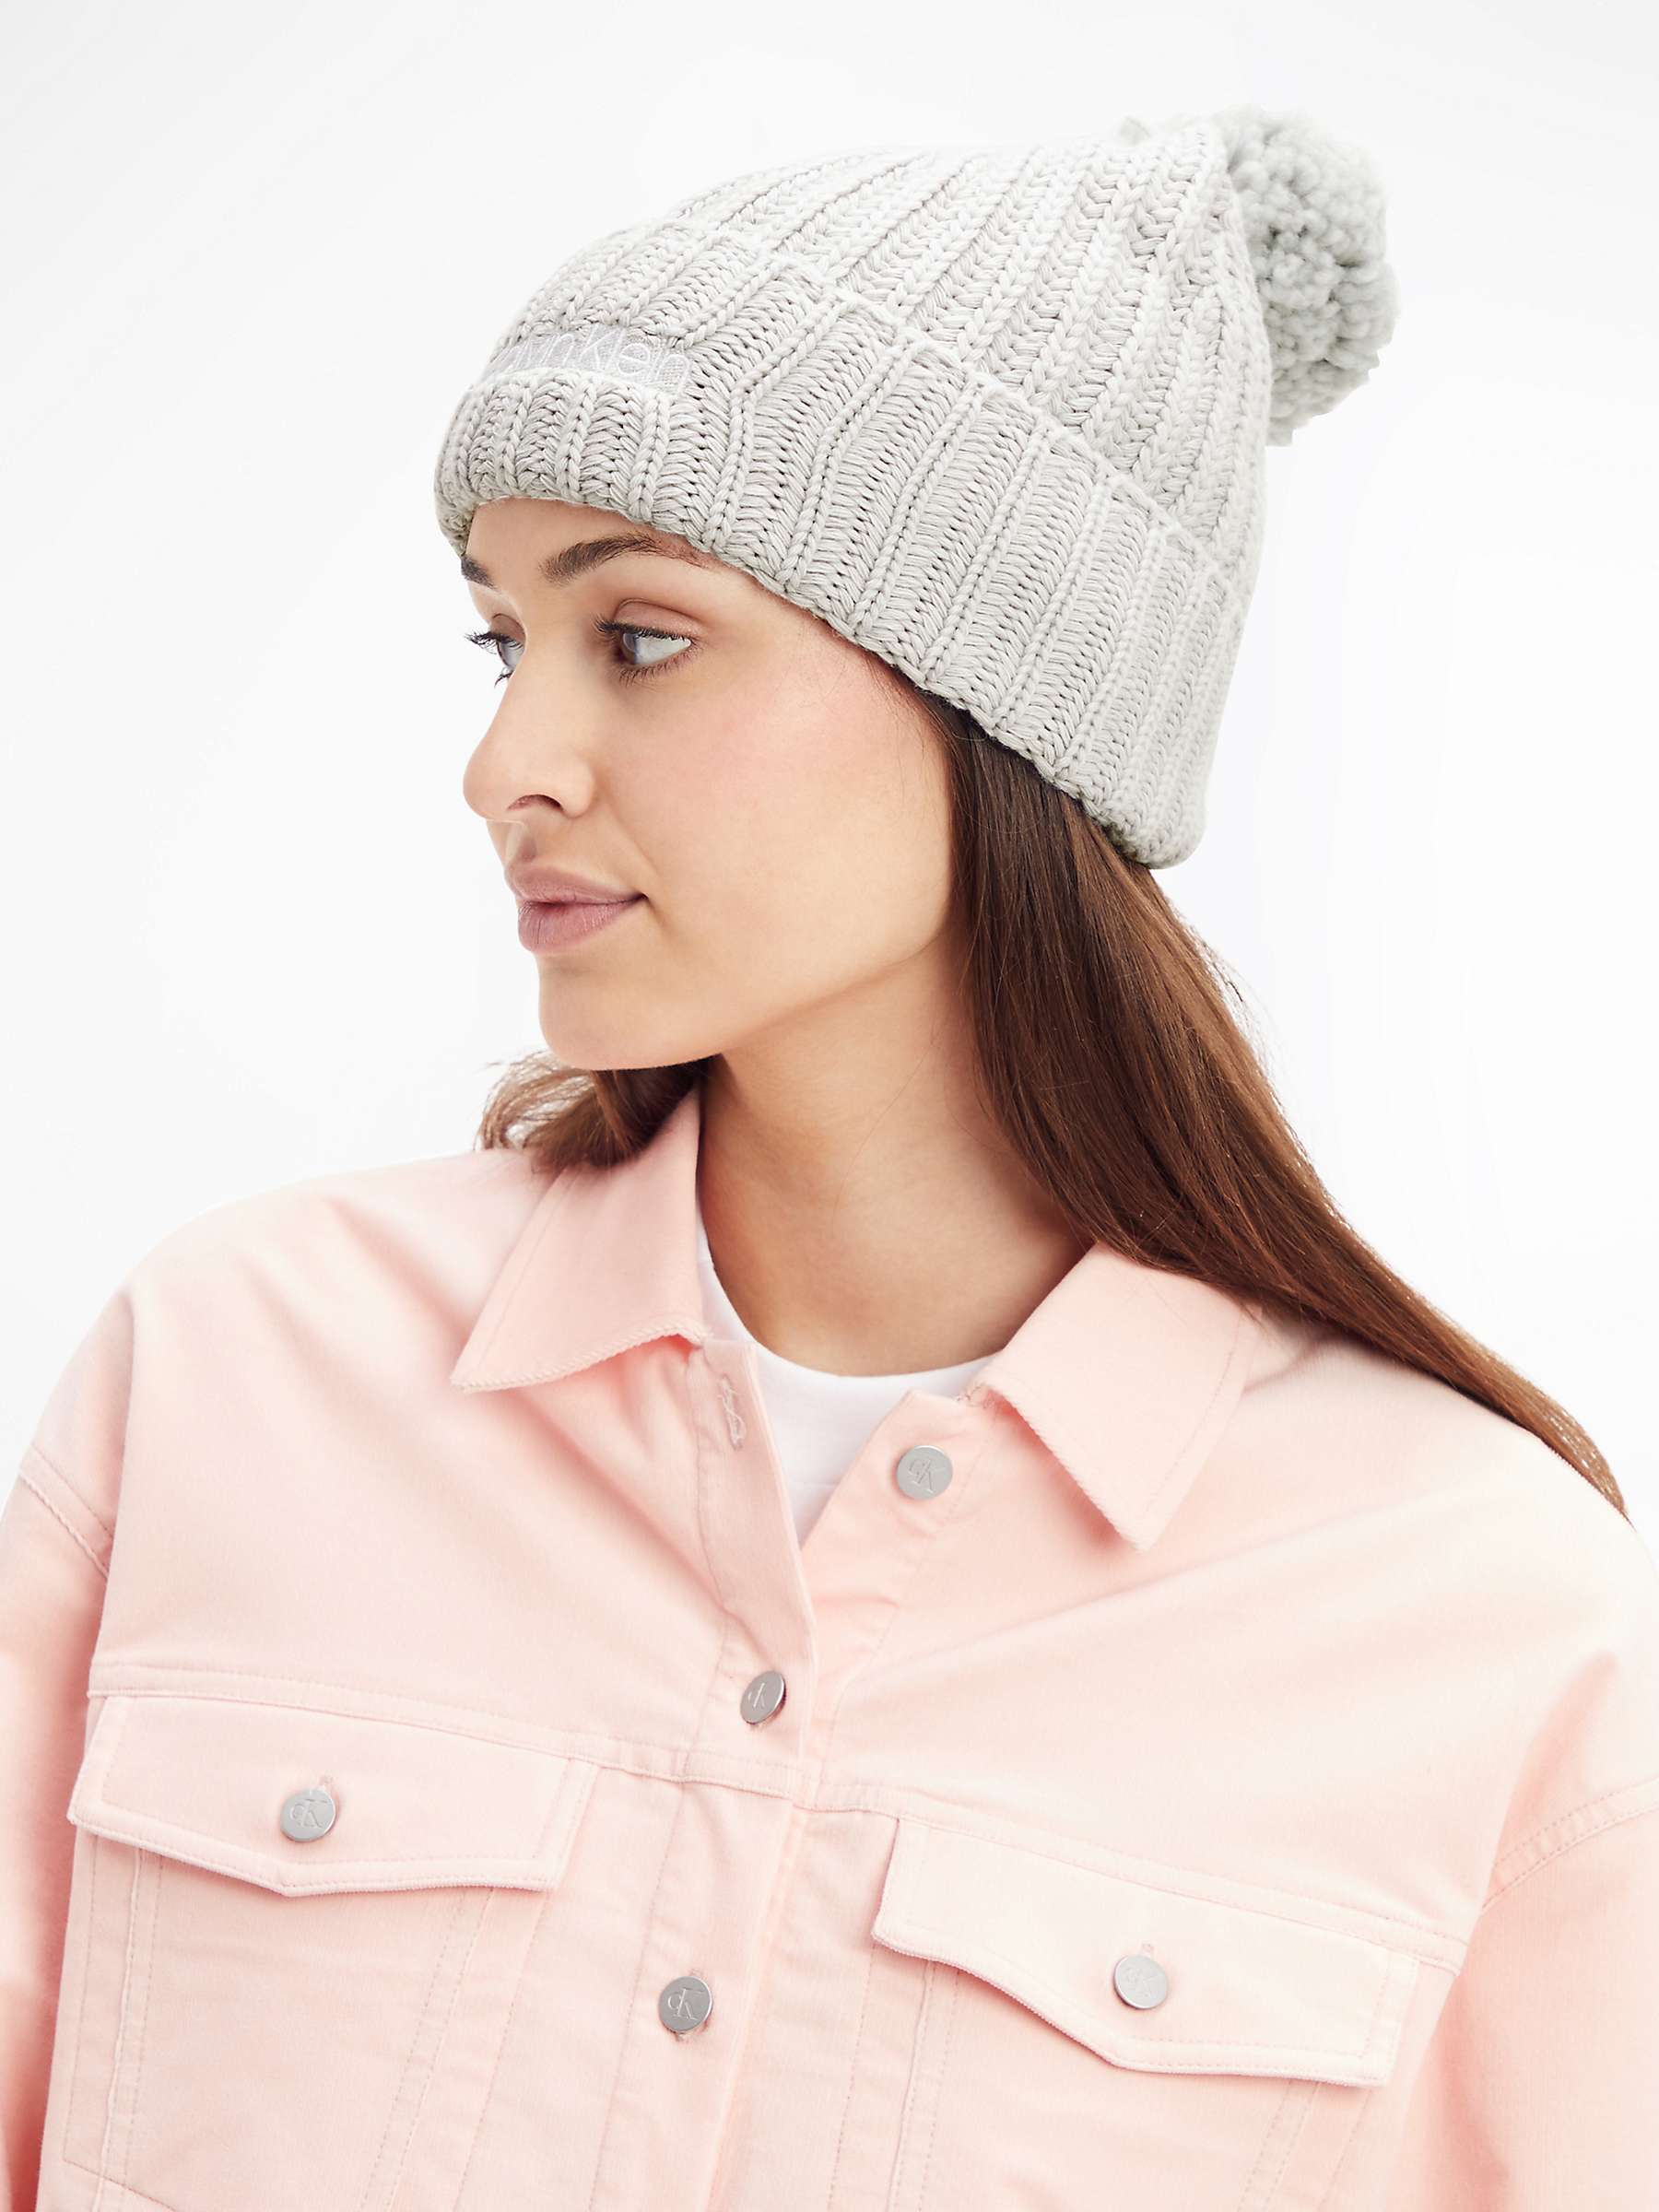 Buy Calvin Klein Oversized Knit Pom Pom Beanie Hat, Cement Online at johnlewis.com